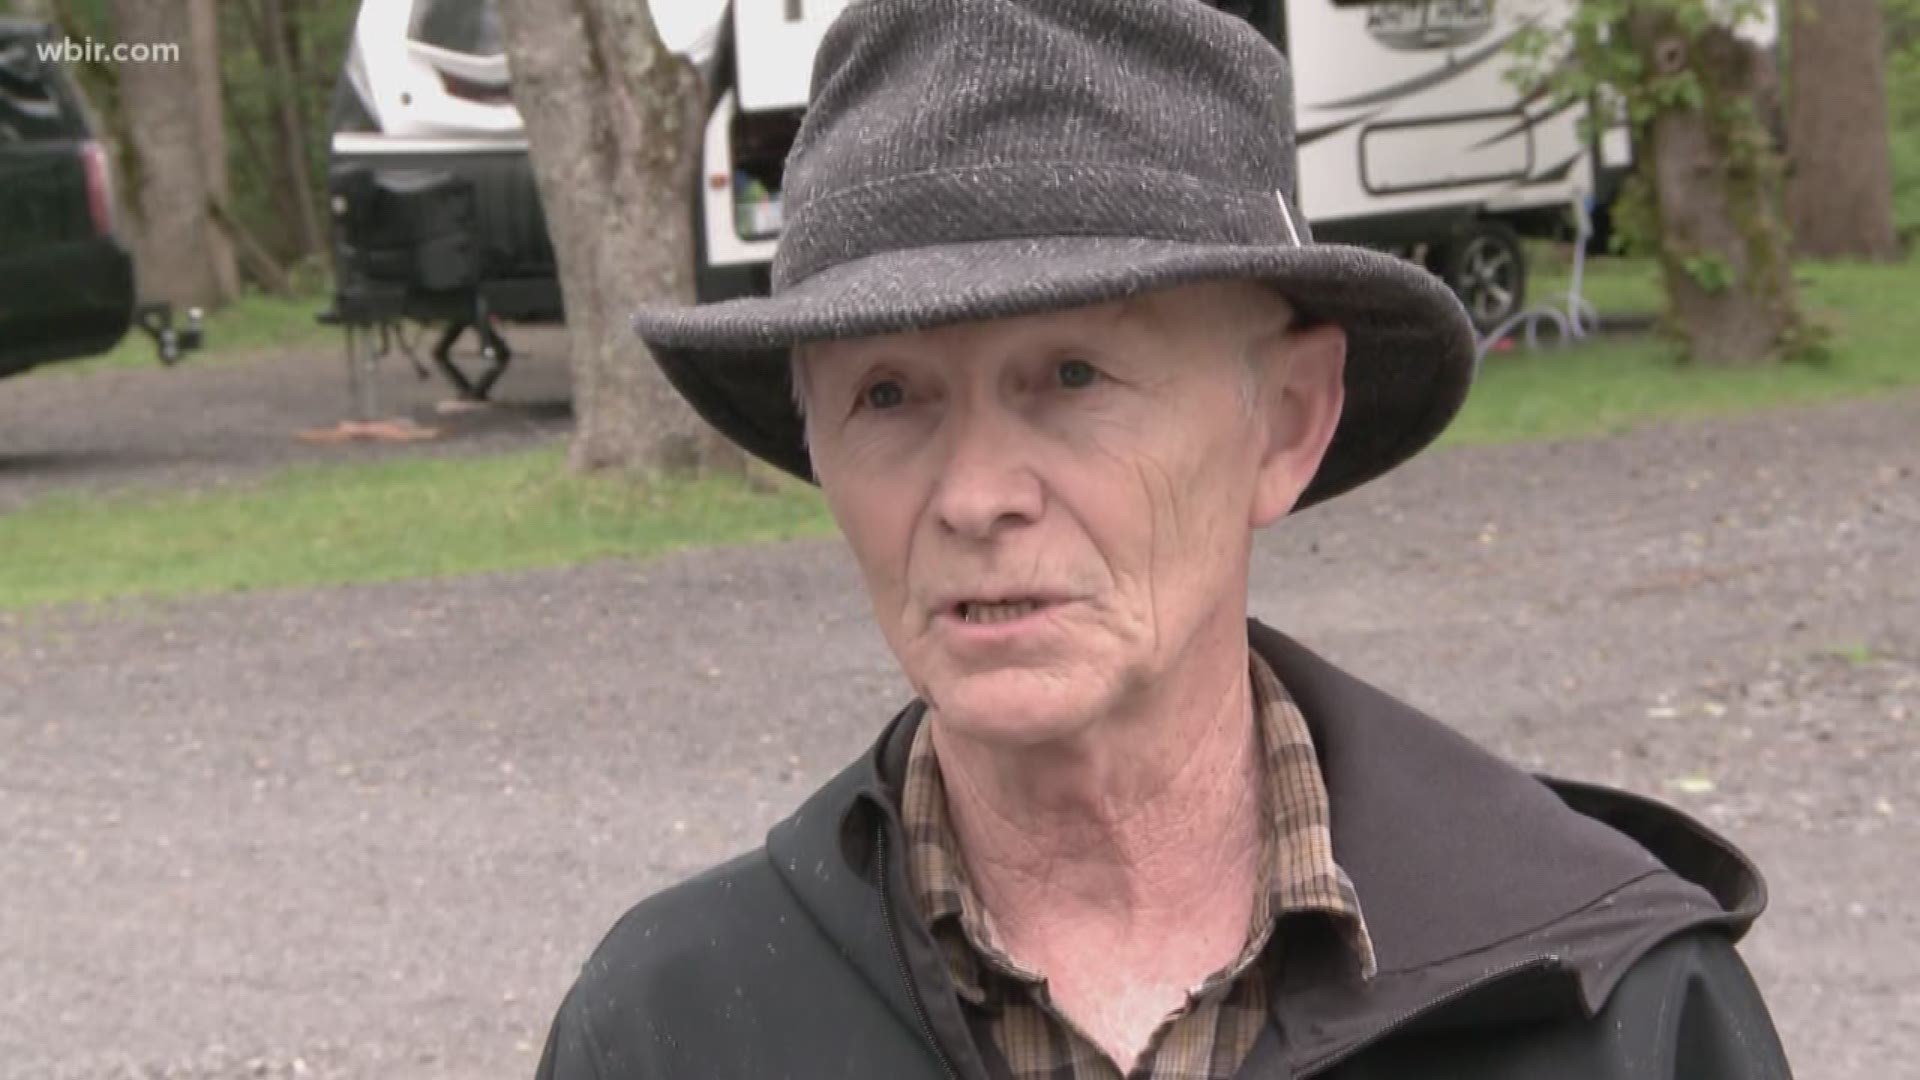 A man celebrating his 42nd wedding anniversary said the rain wouldn't ruin his camping trip.